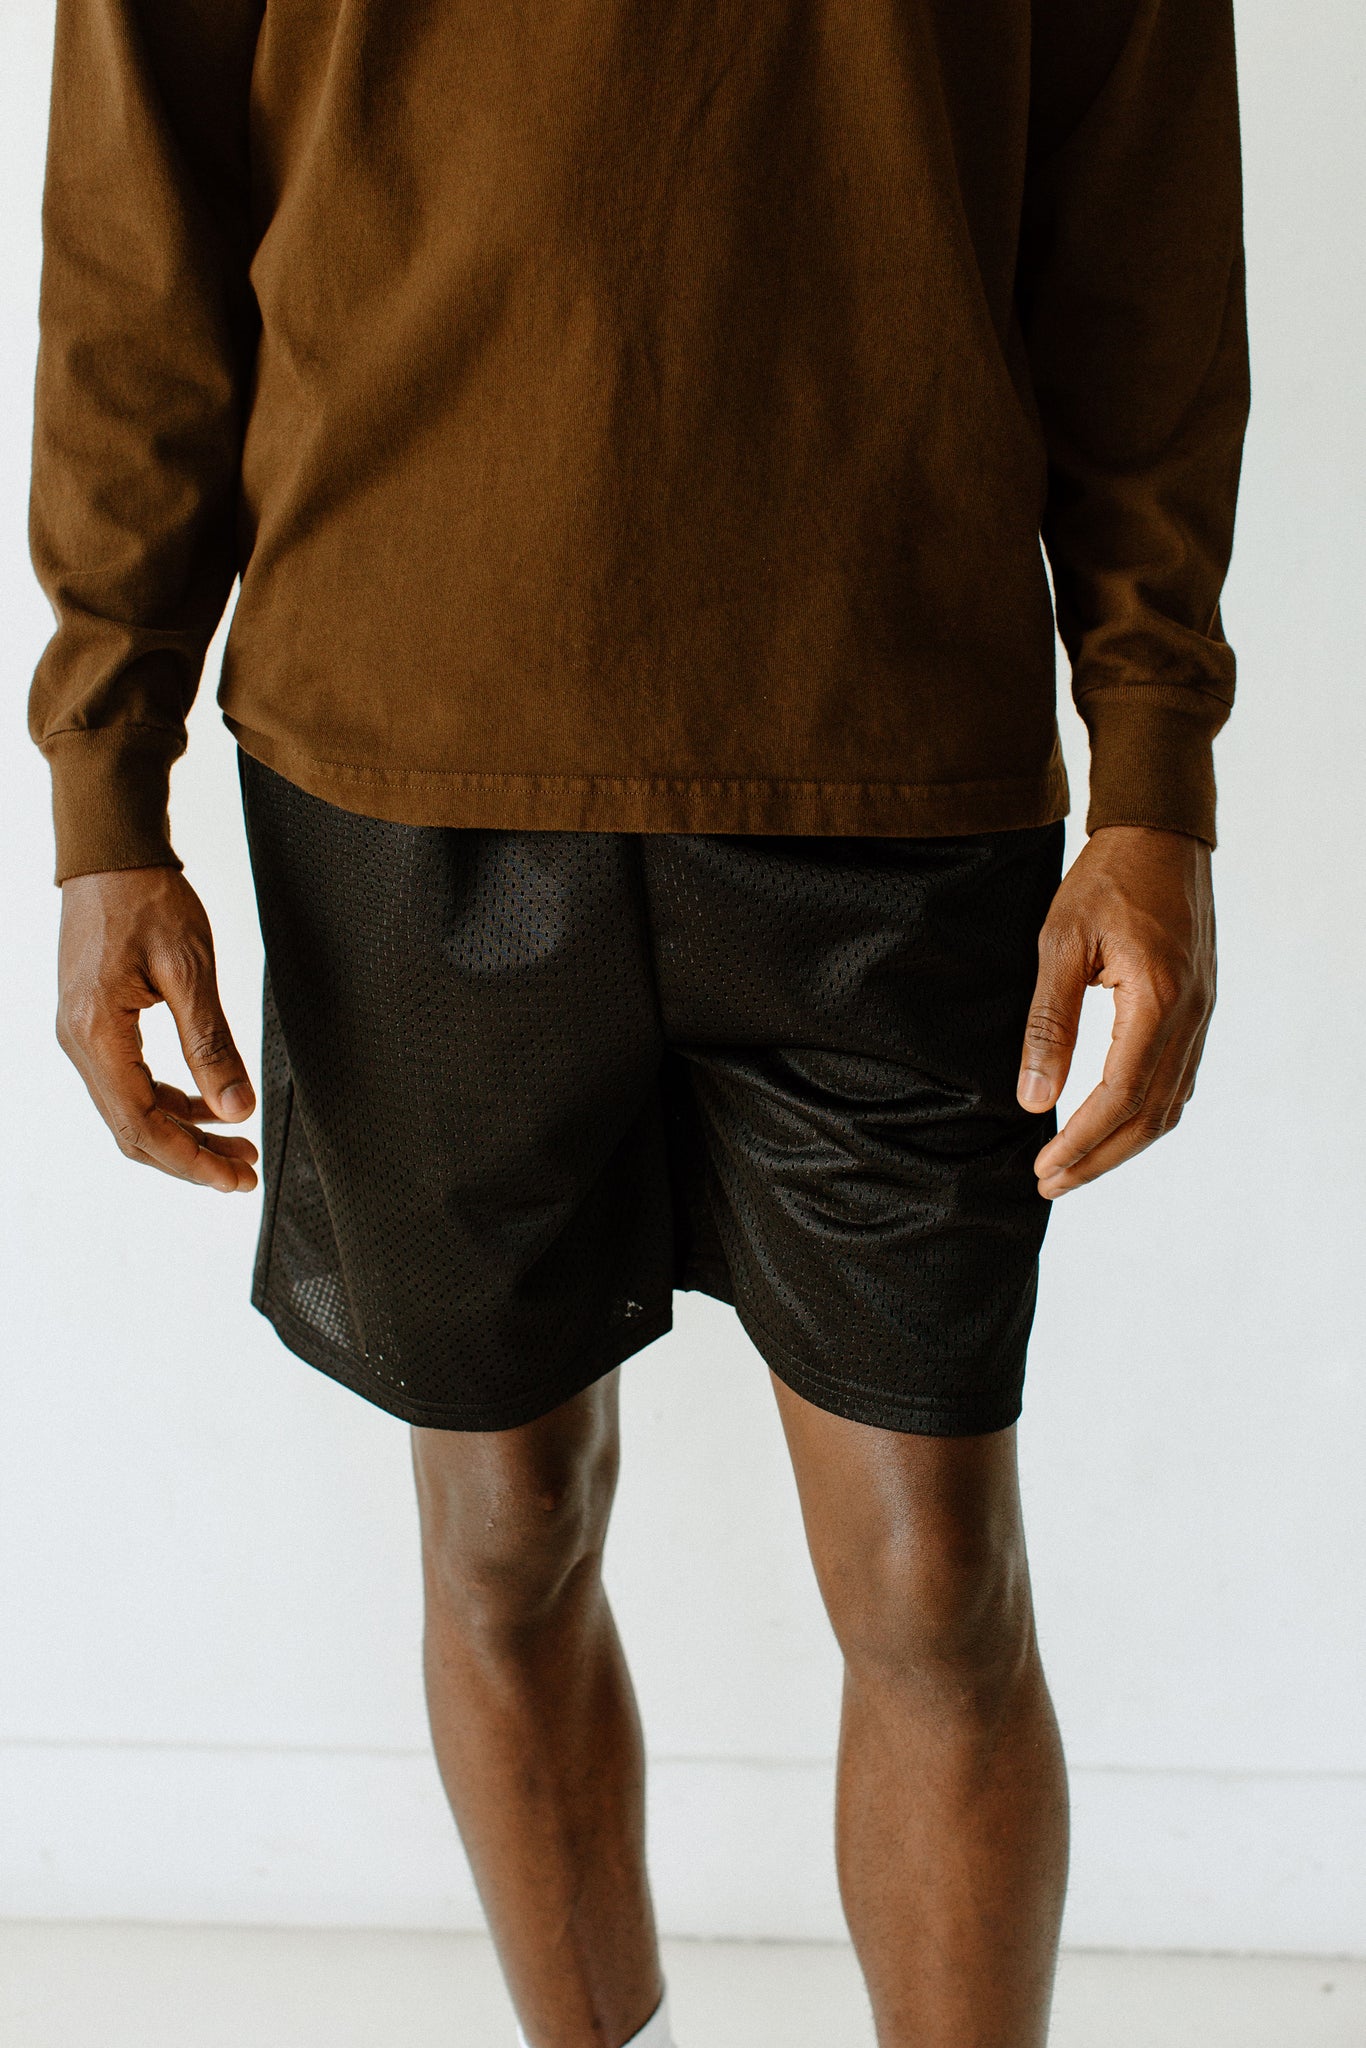 MSPP054 - Unisex Mesh Gym Shorts - Black